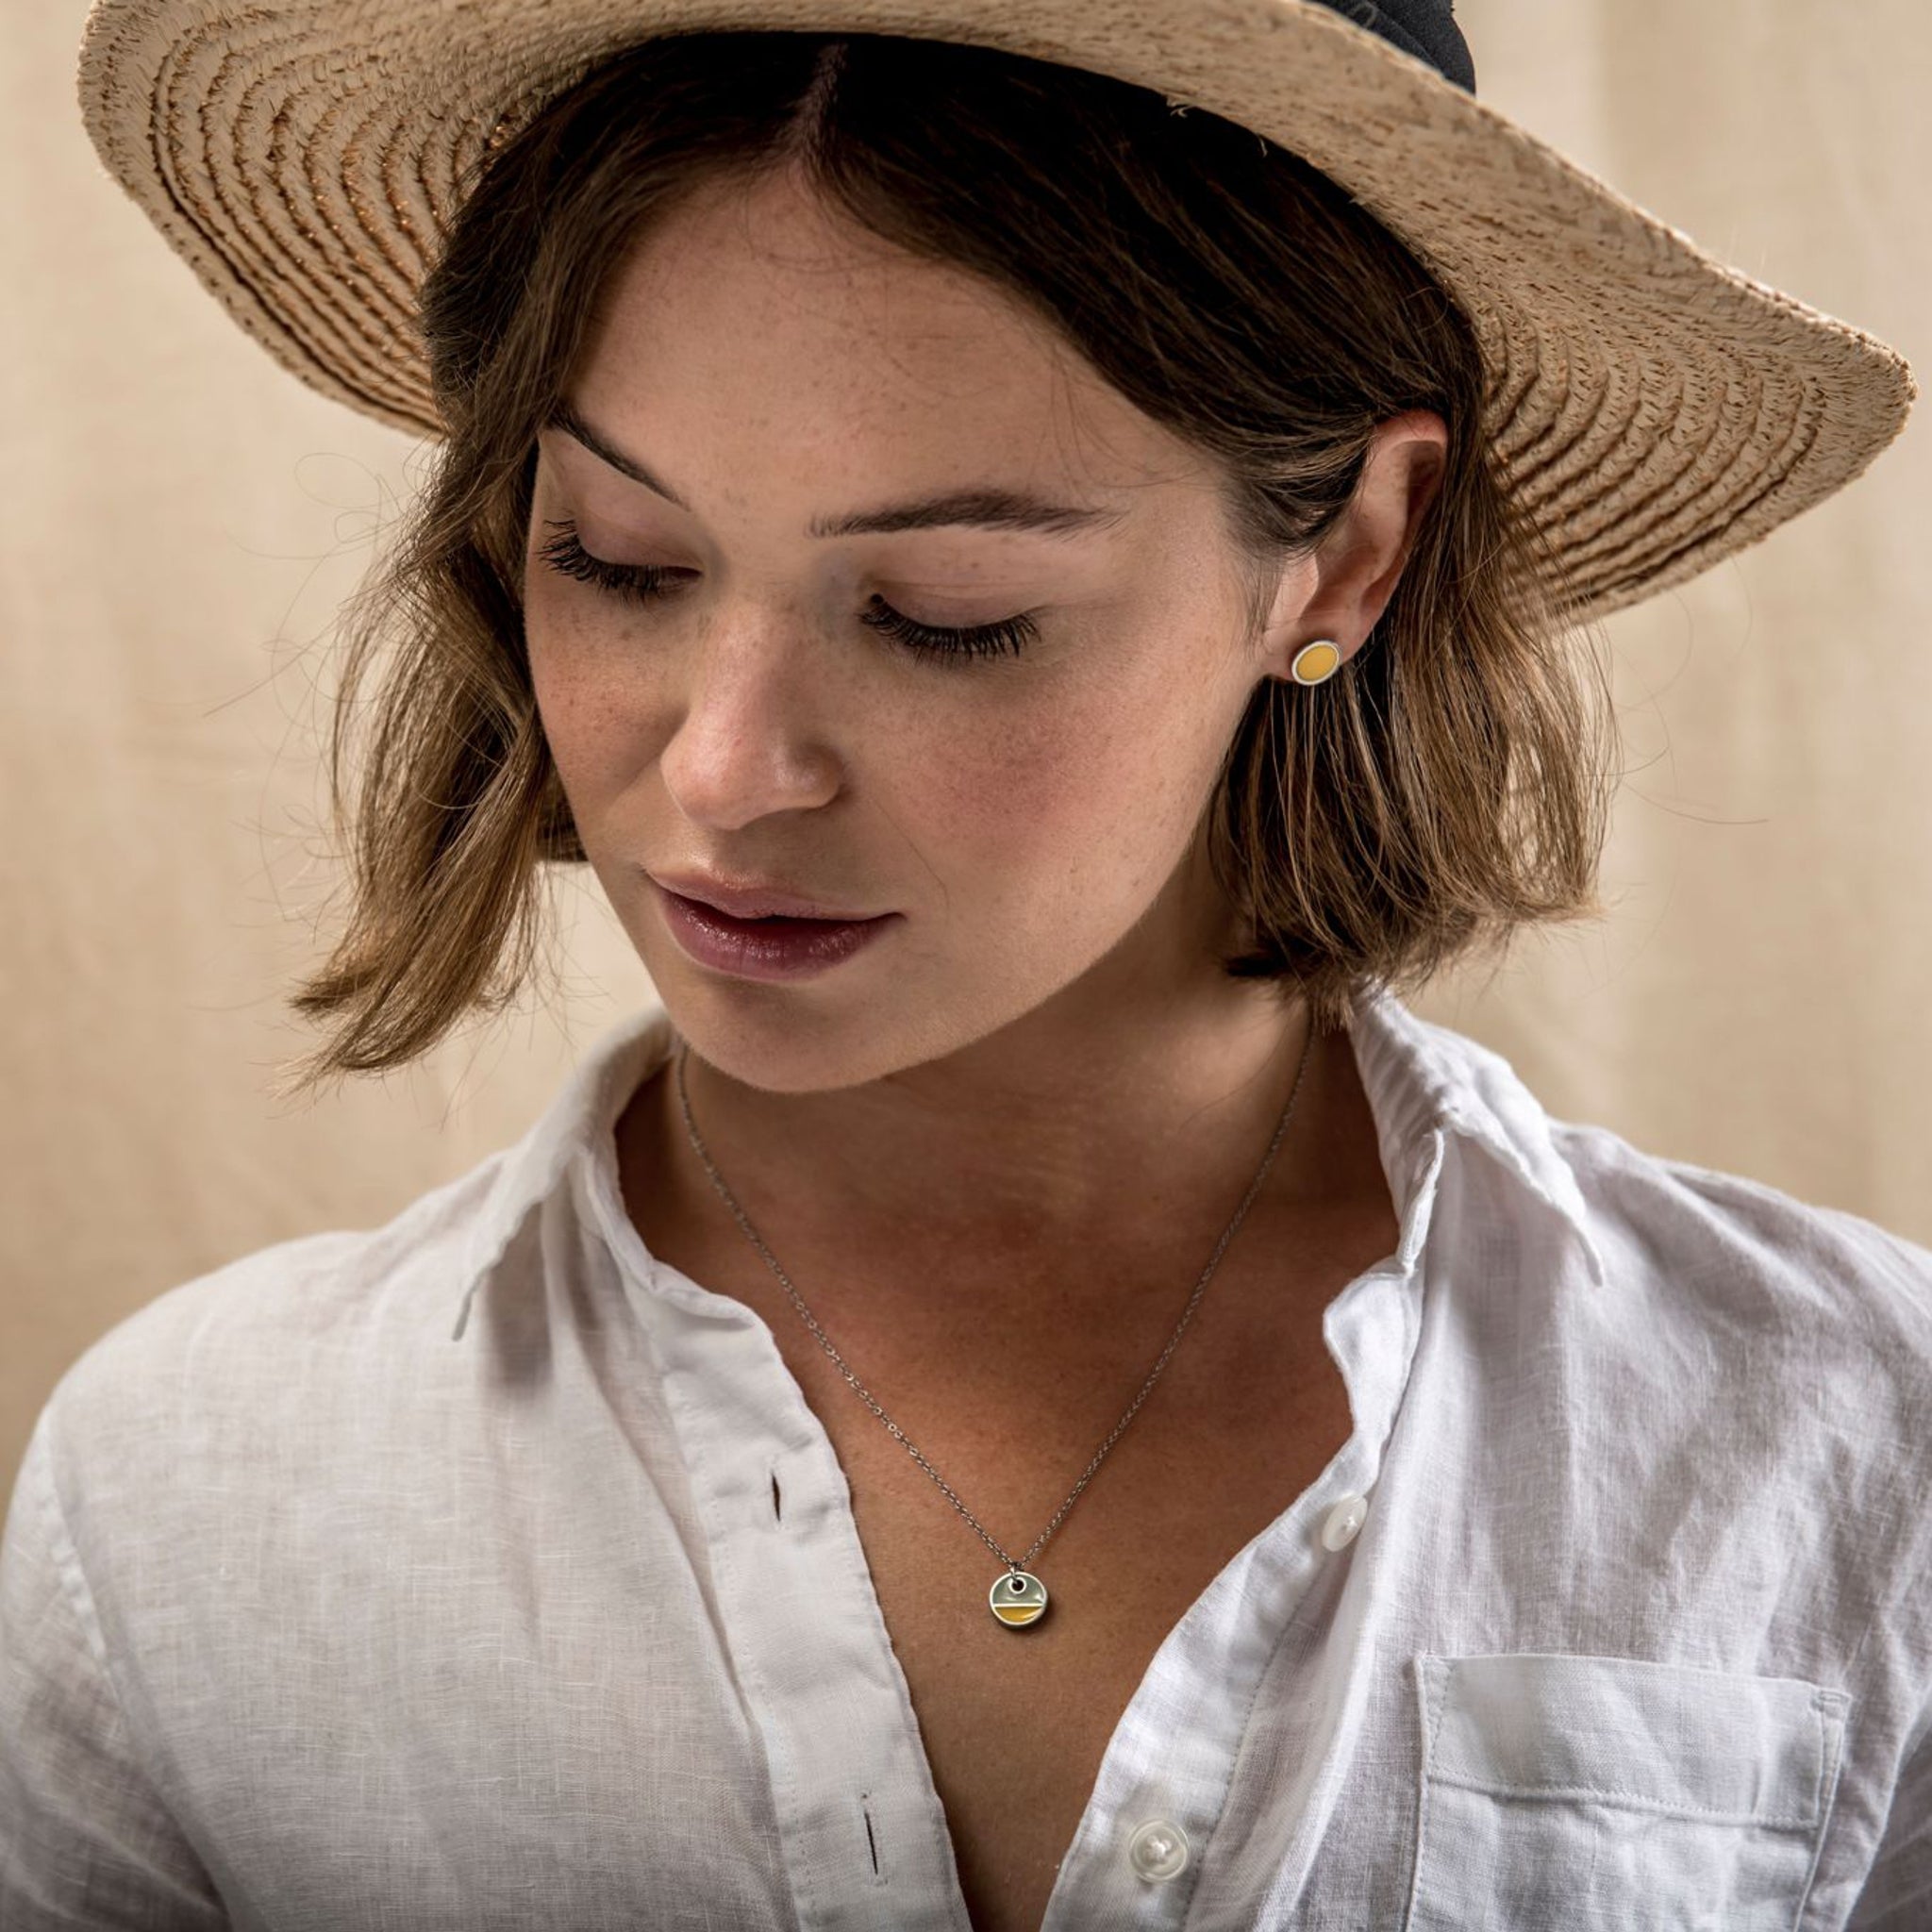 Fashion model wearing a simple, yellow, circular stud earring.